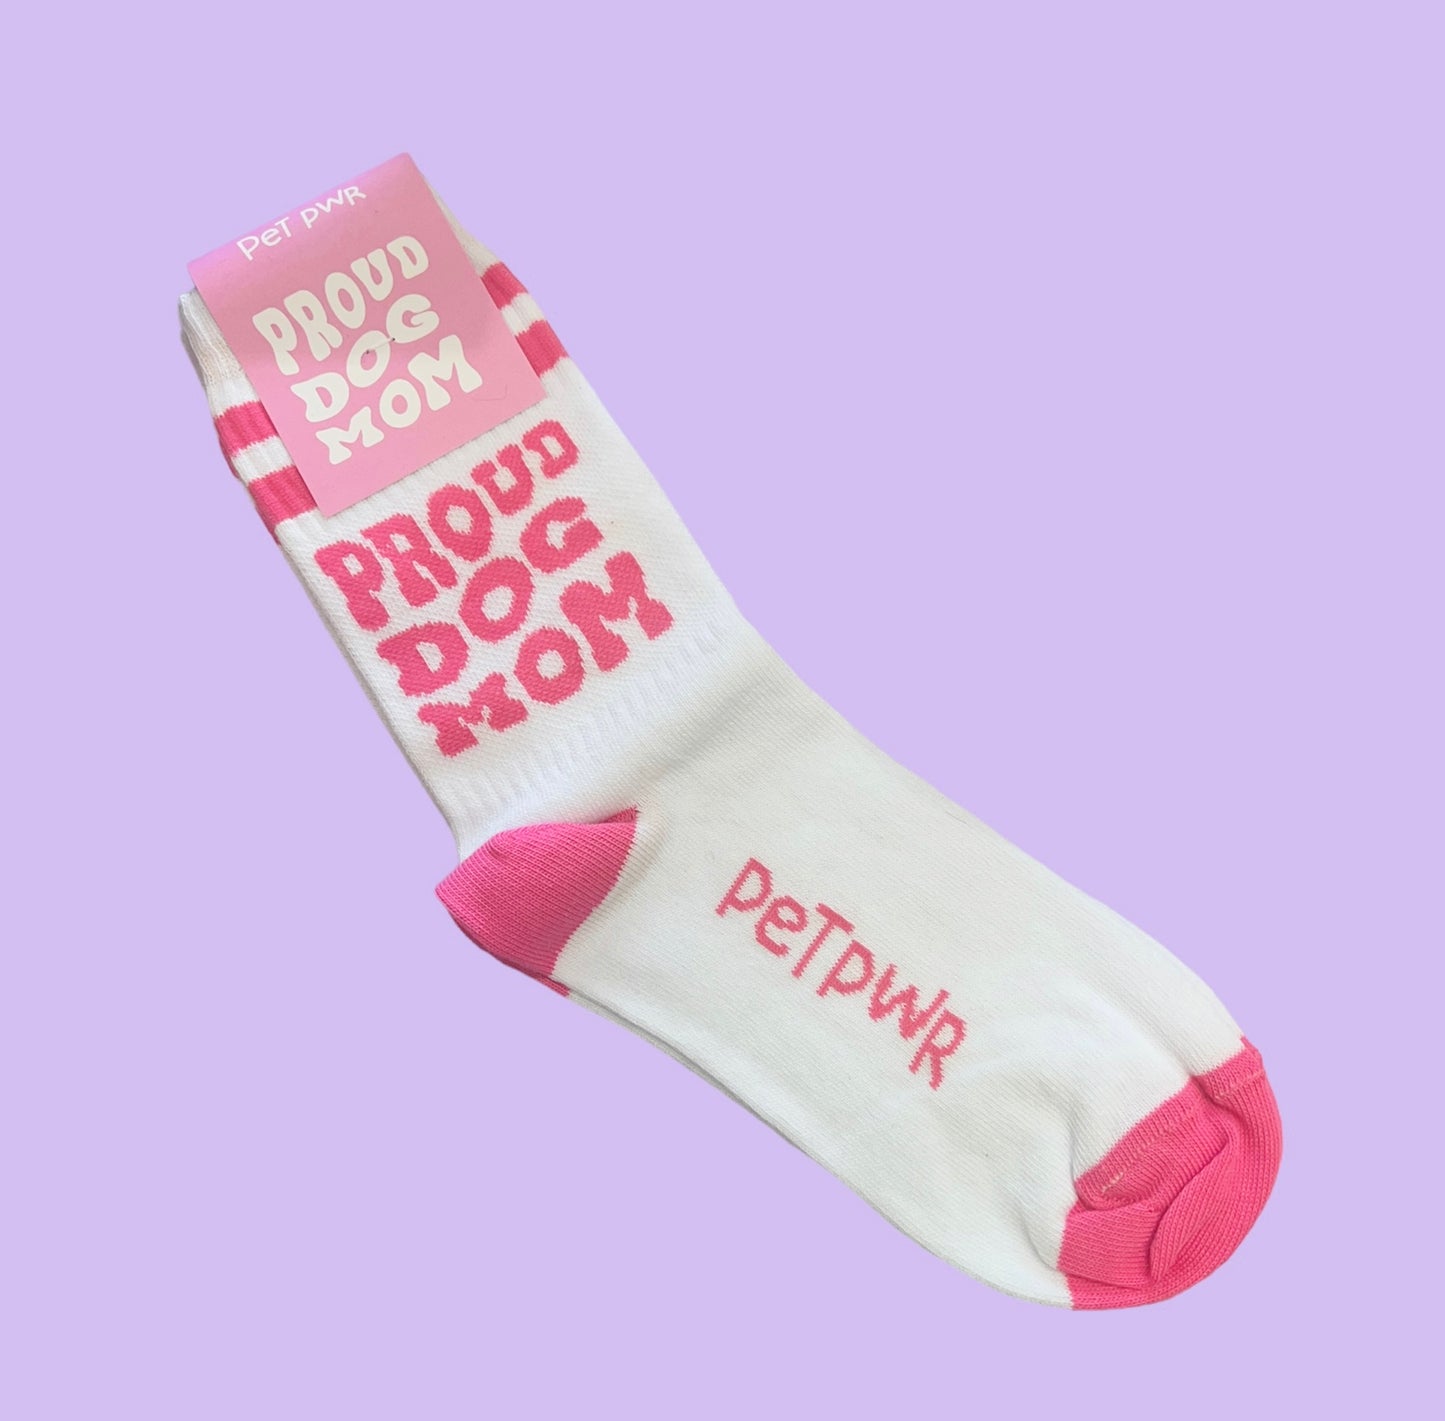 "Proud dog mom" socks 🐶